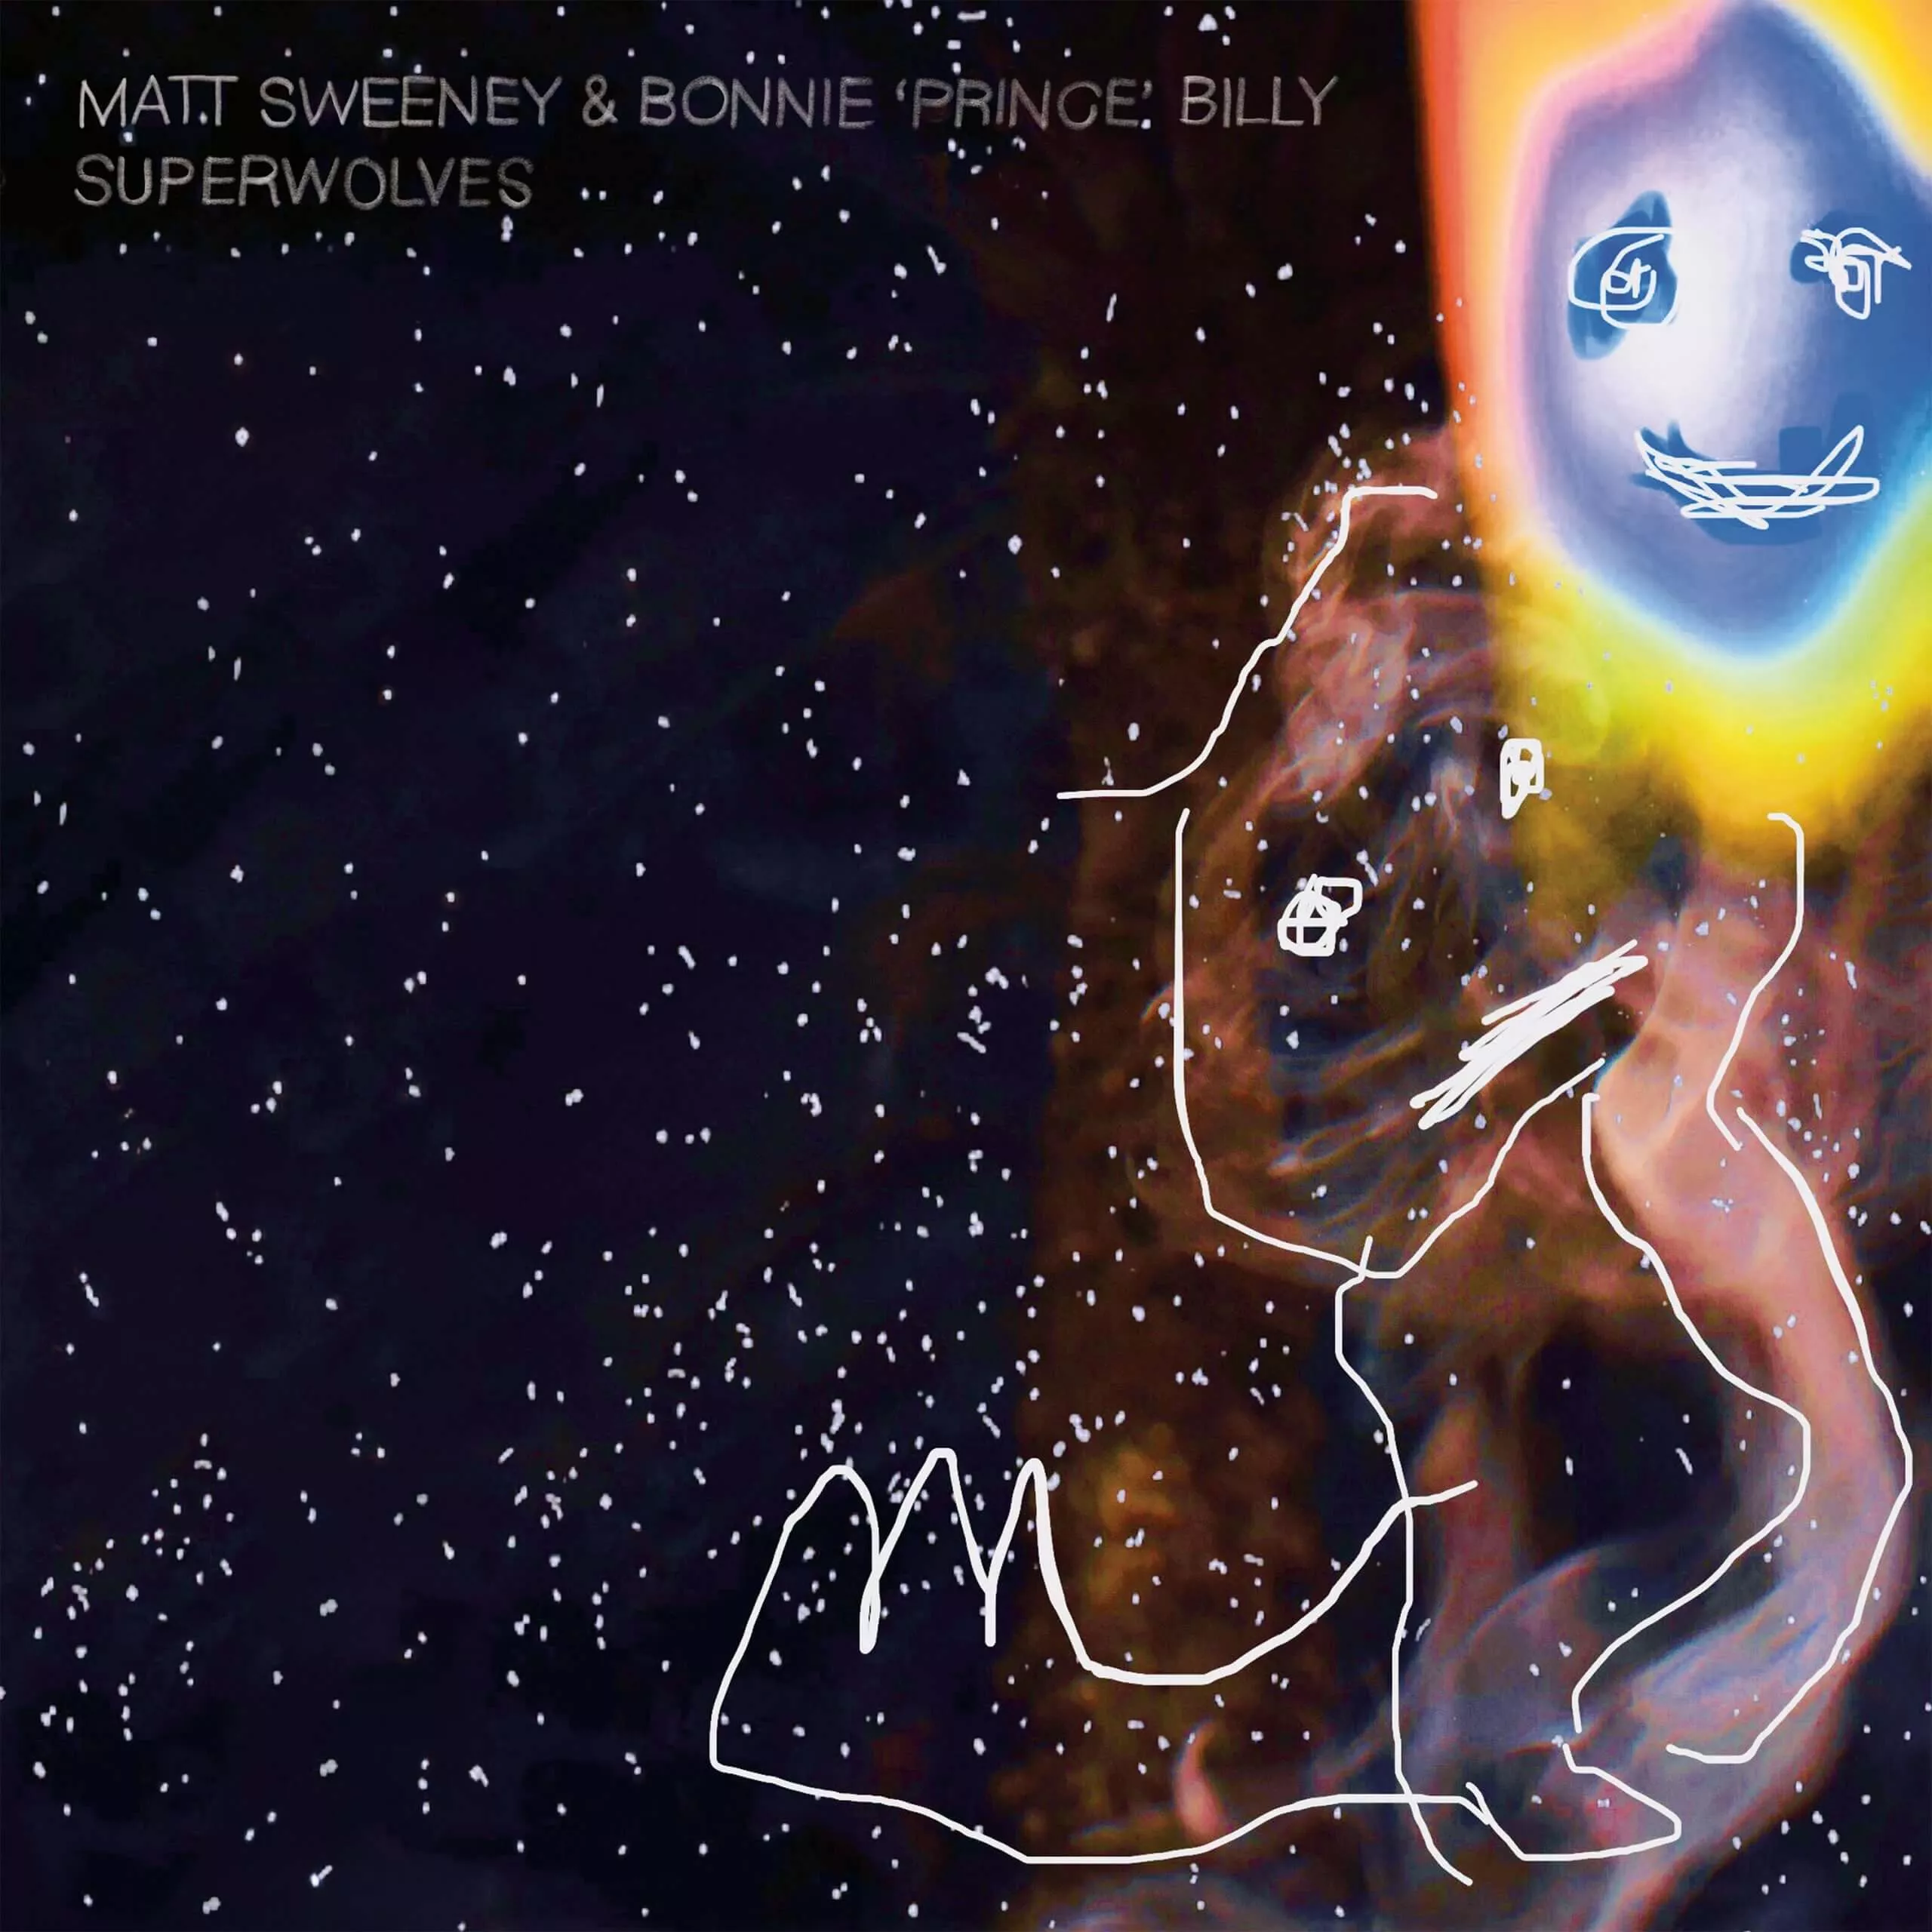 Superwolves - Matt Sweeney & Bonnie "Prince" Billy